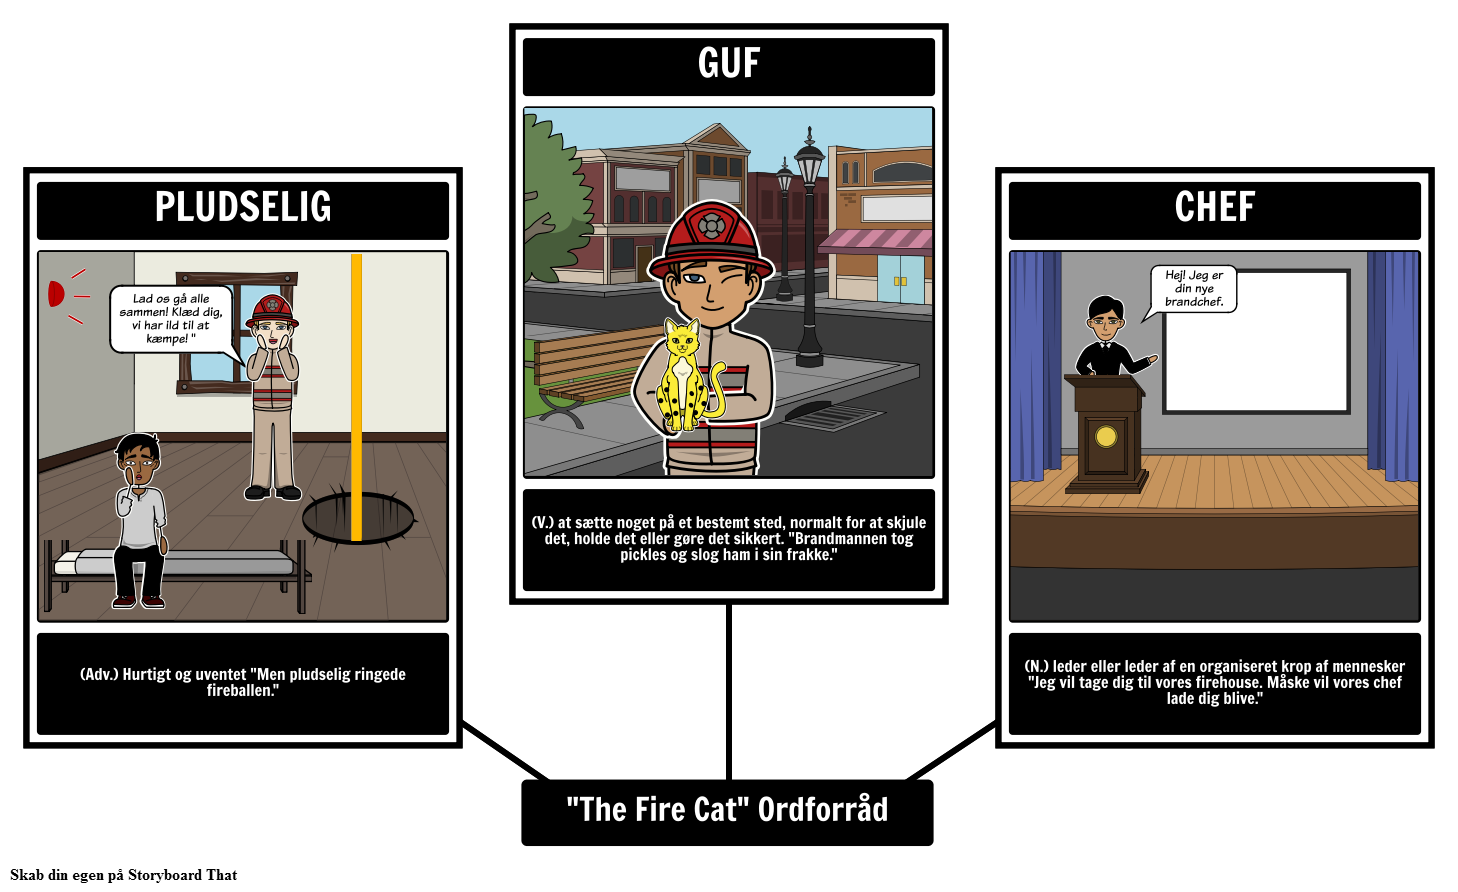 The Fire Cat Ordforråd